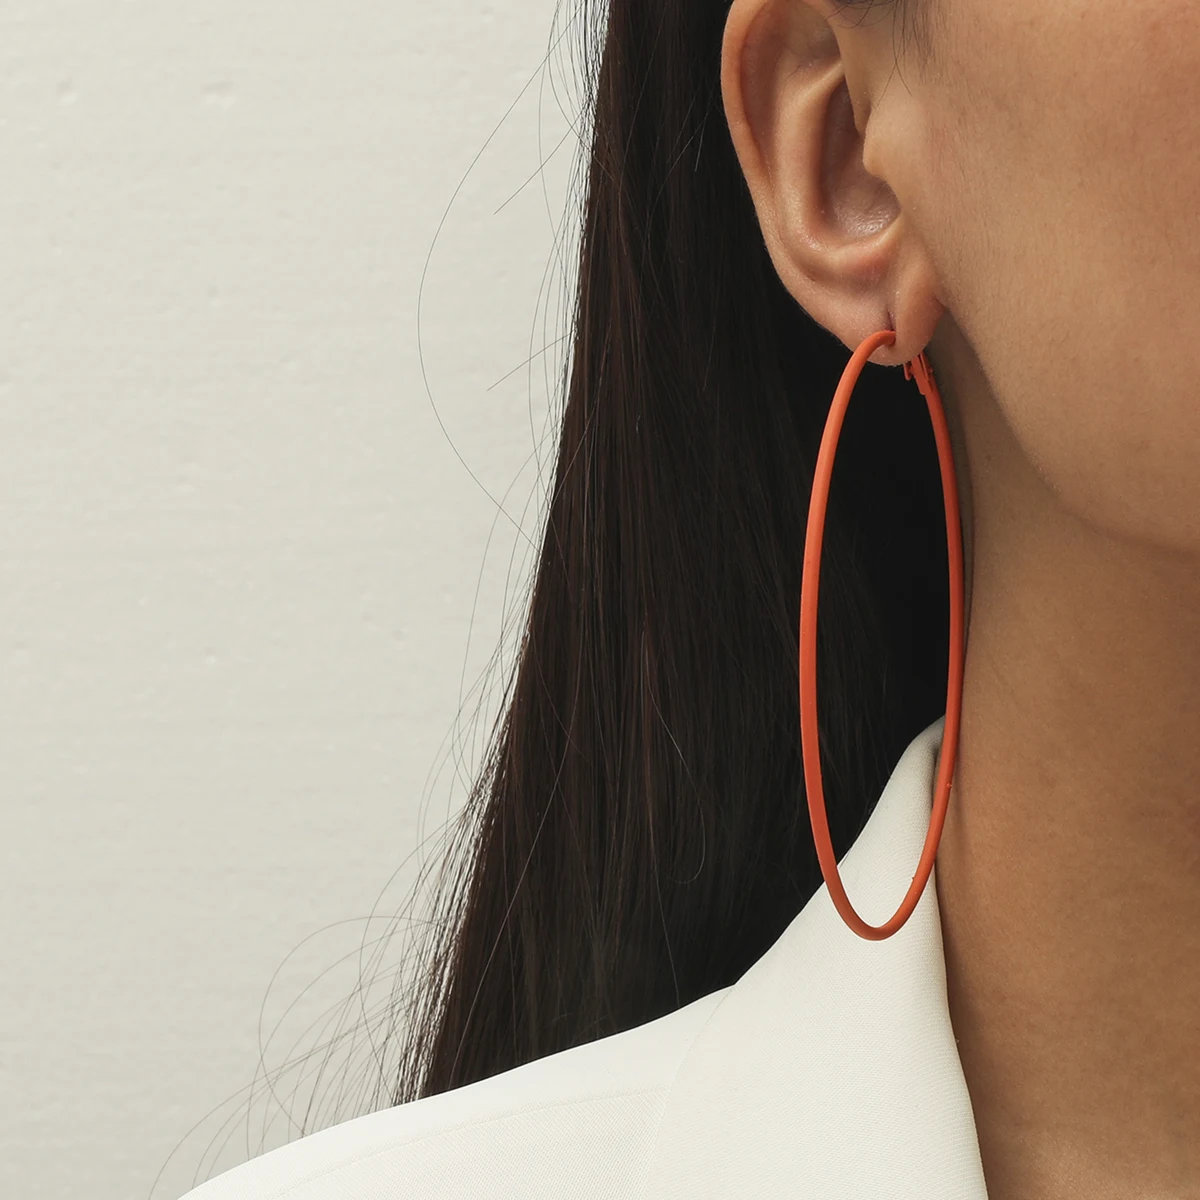 MOREDEAR Fashion Orange Rubber Paint Big Earring